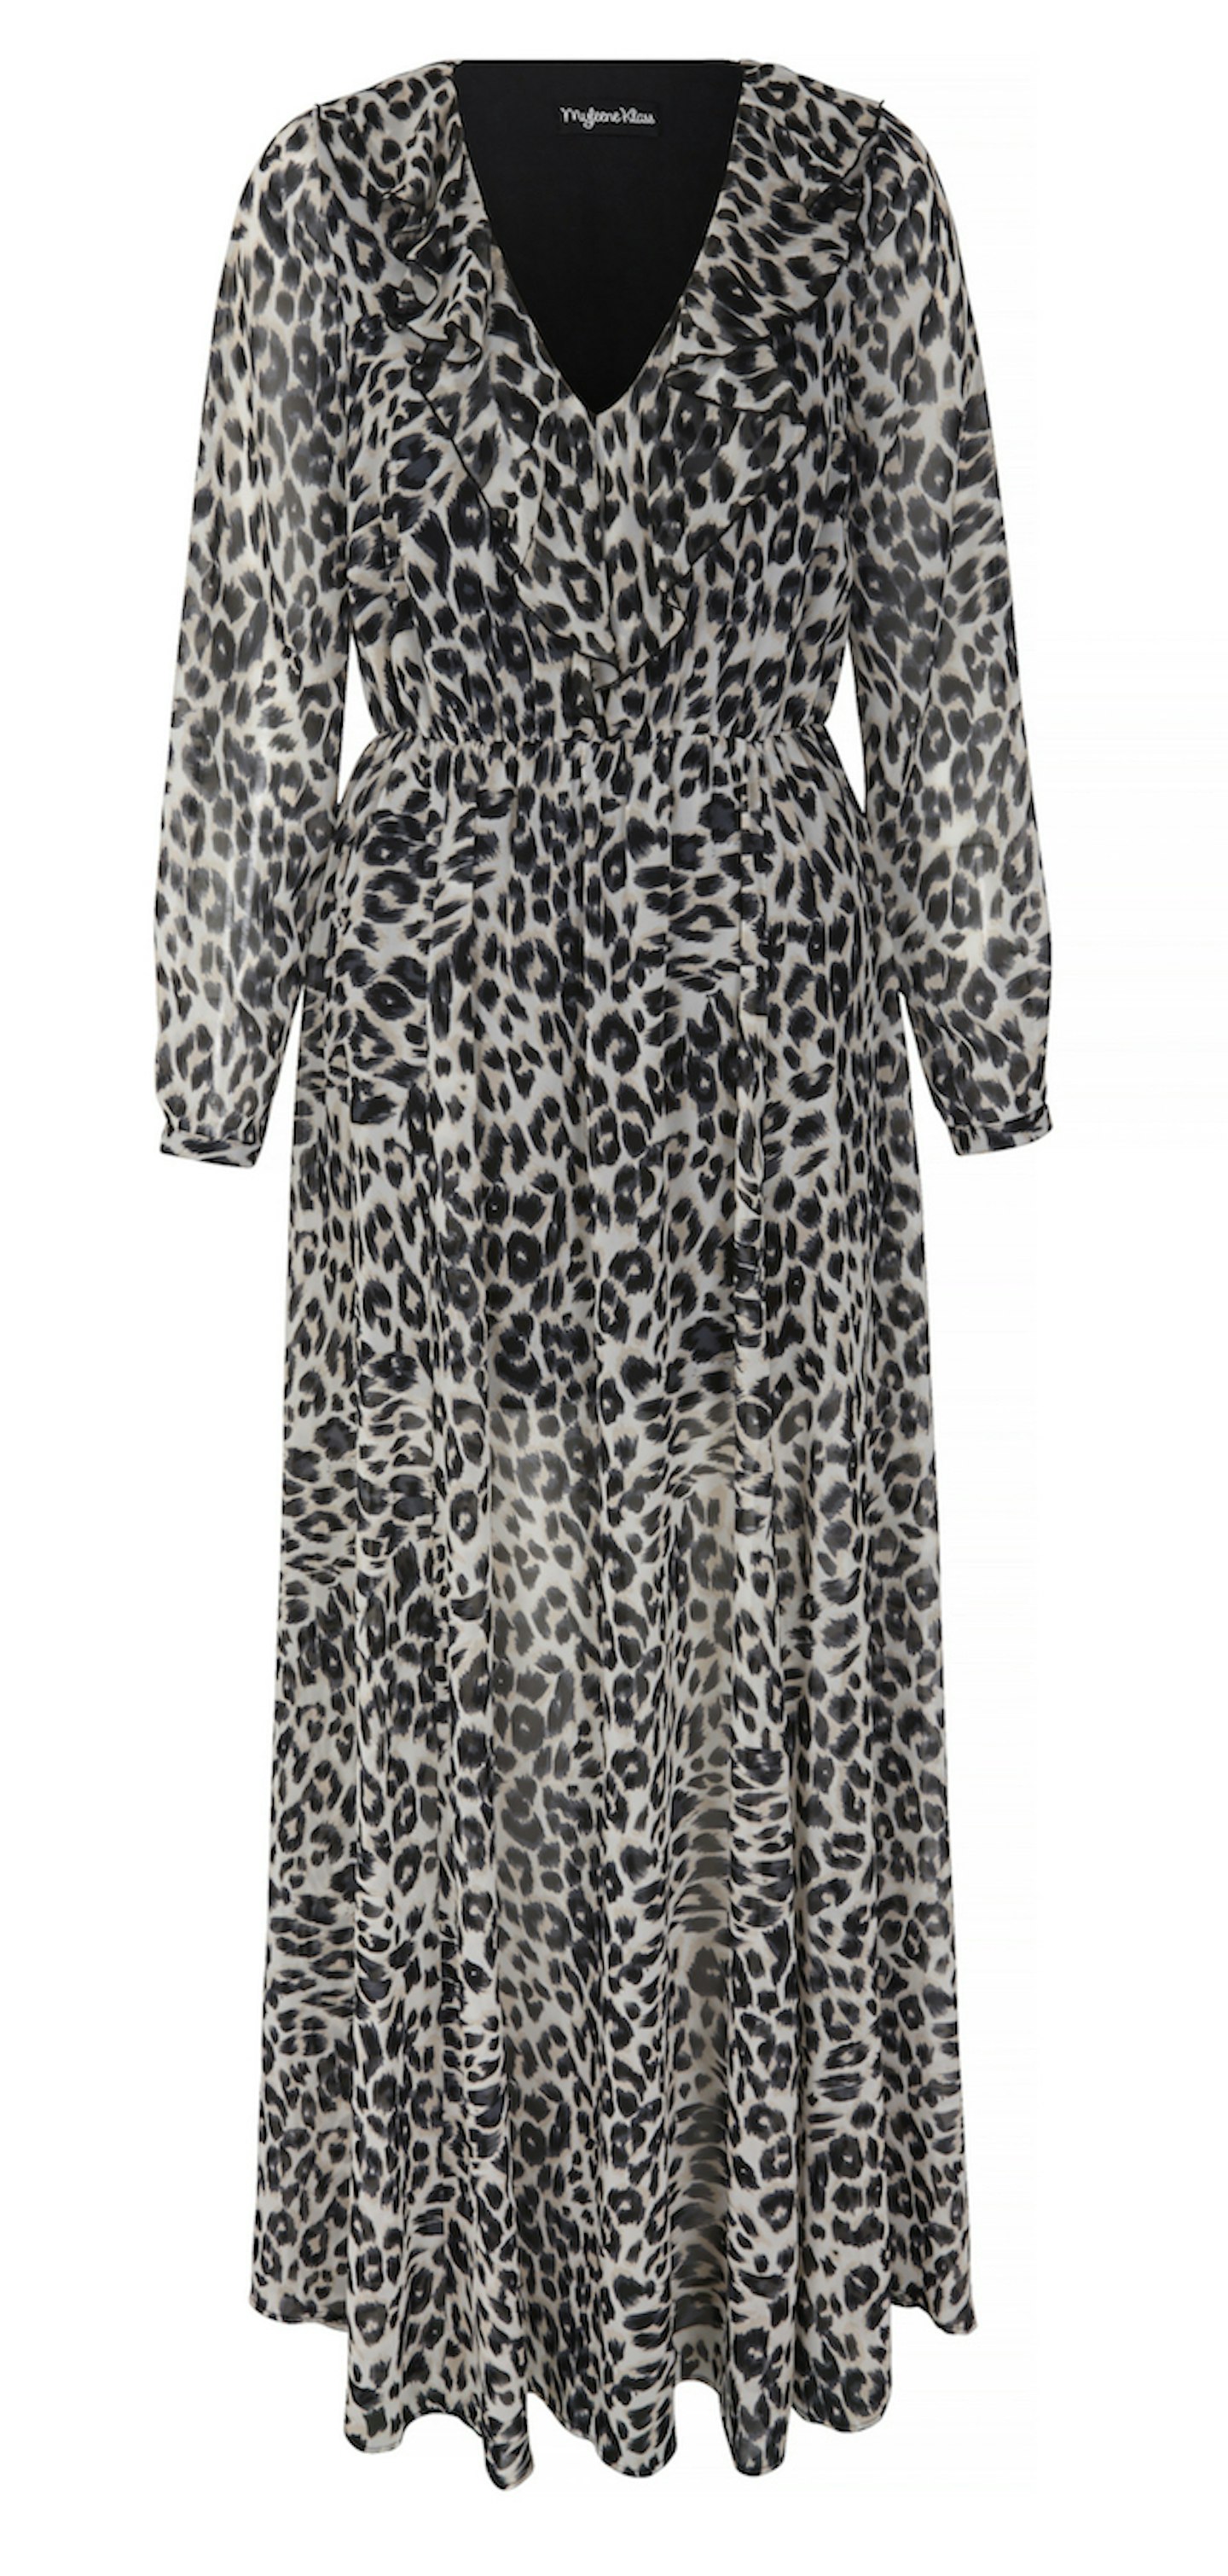 Animal print long-sleeved dress from Littlewoods